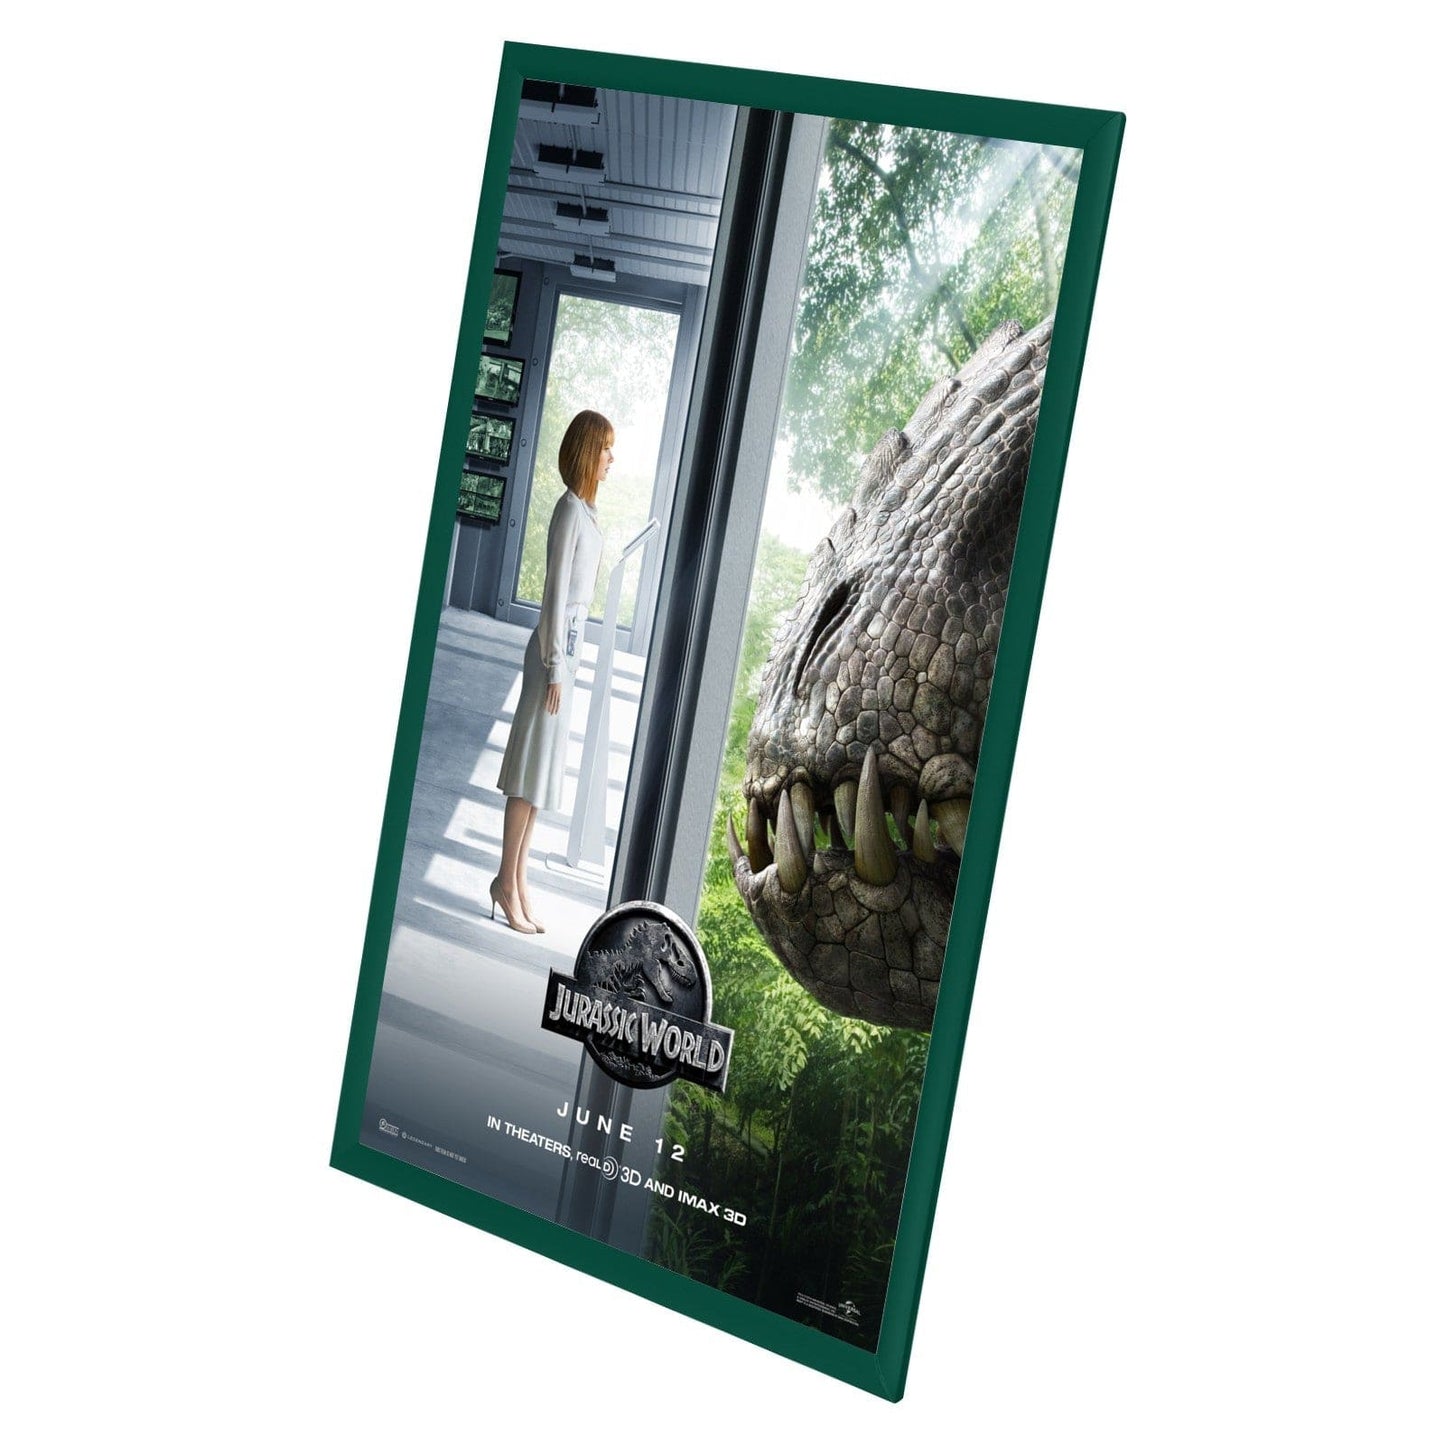 24x36 Green SnapeZo® Snap Frame - 1" Profile - Snap Frames Direct